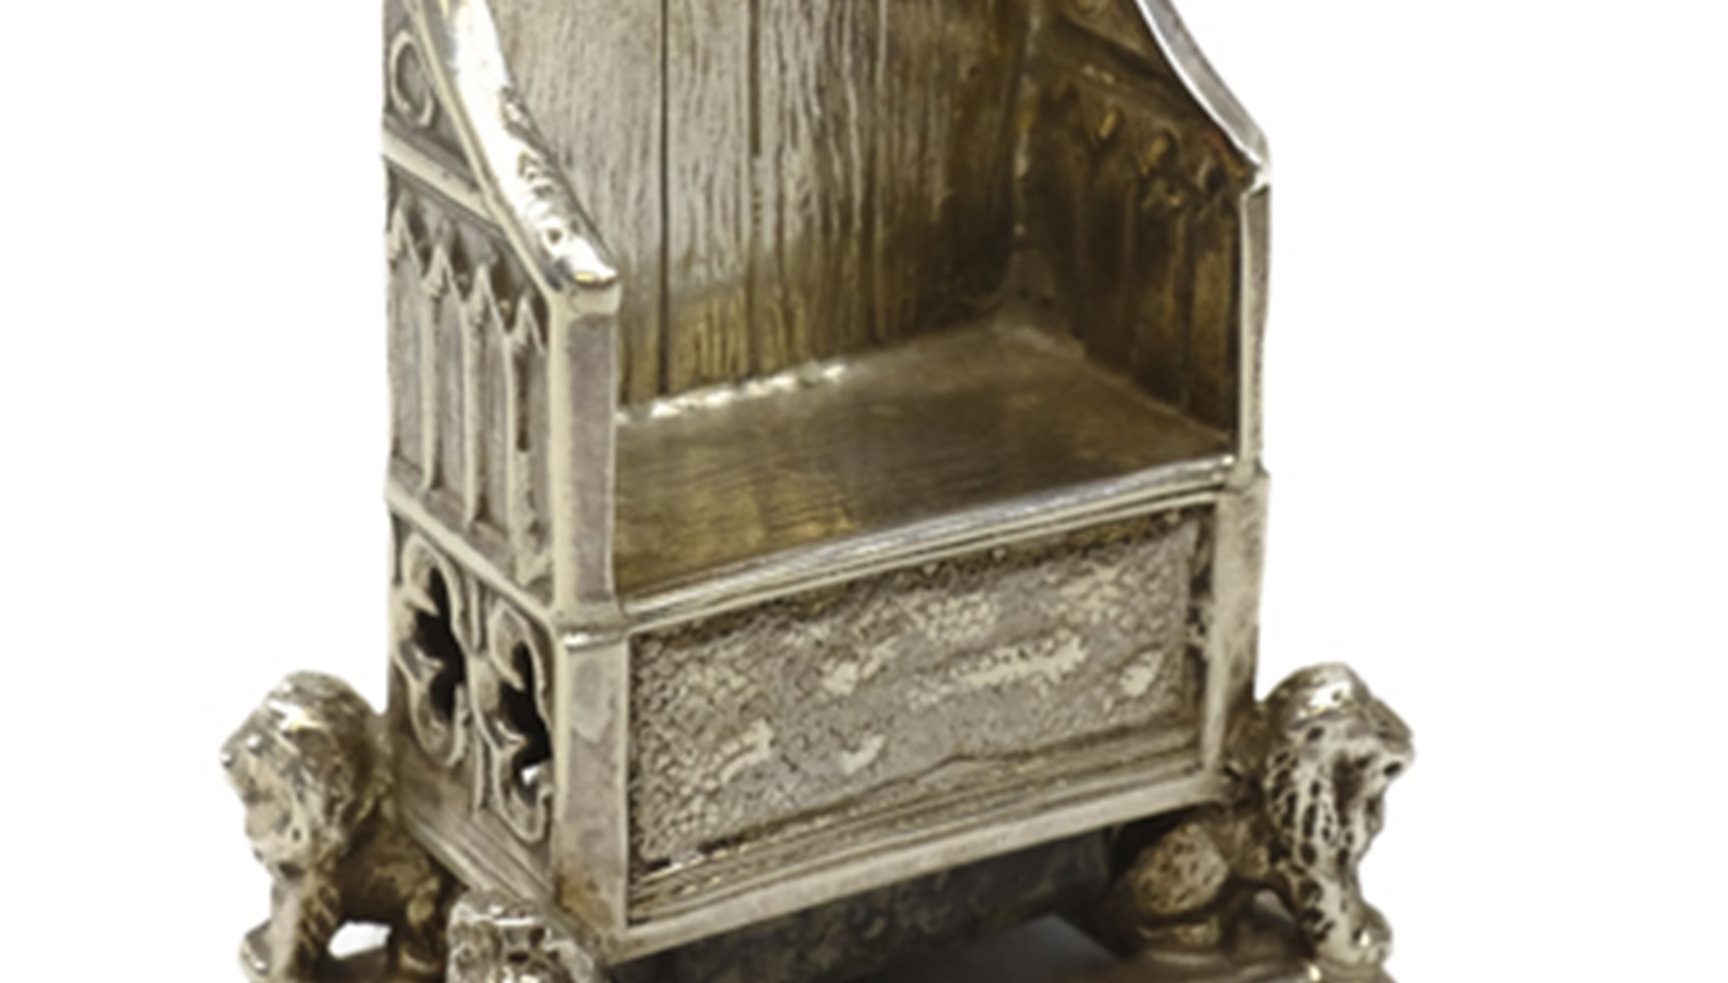 The Coronation chair.